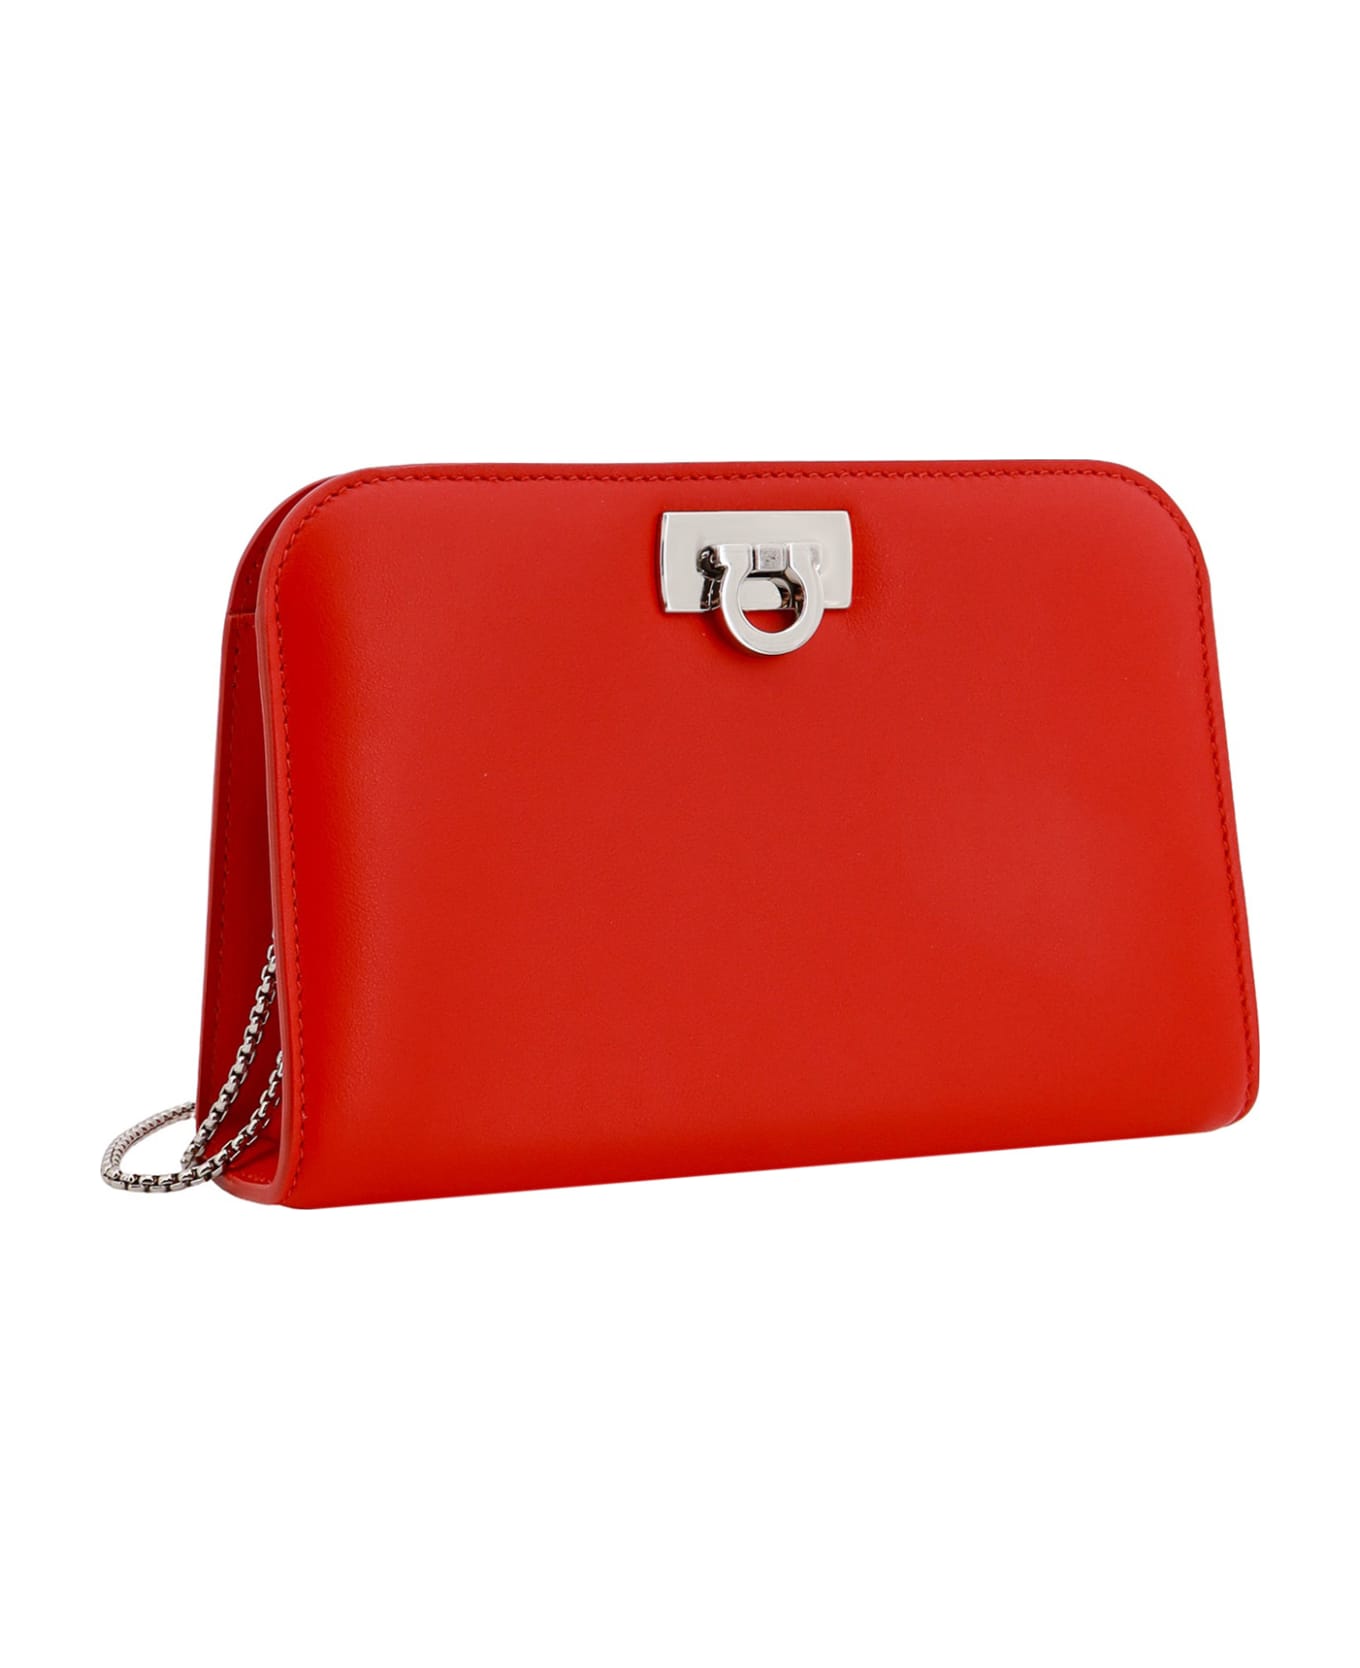 Ferragamo Diana Shoulder Bag - Red